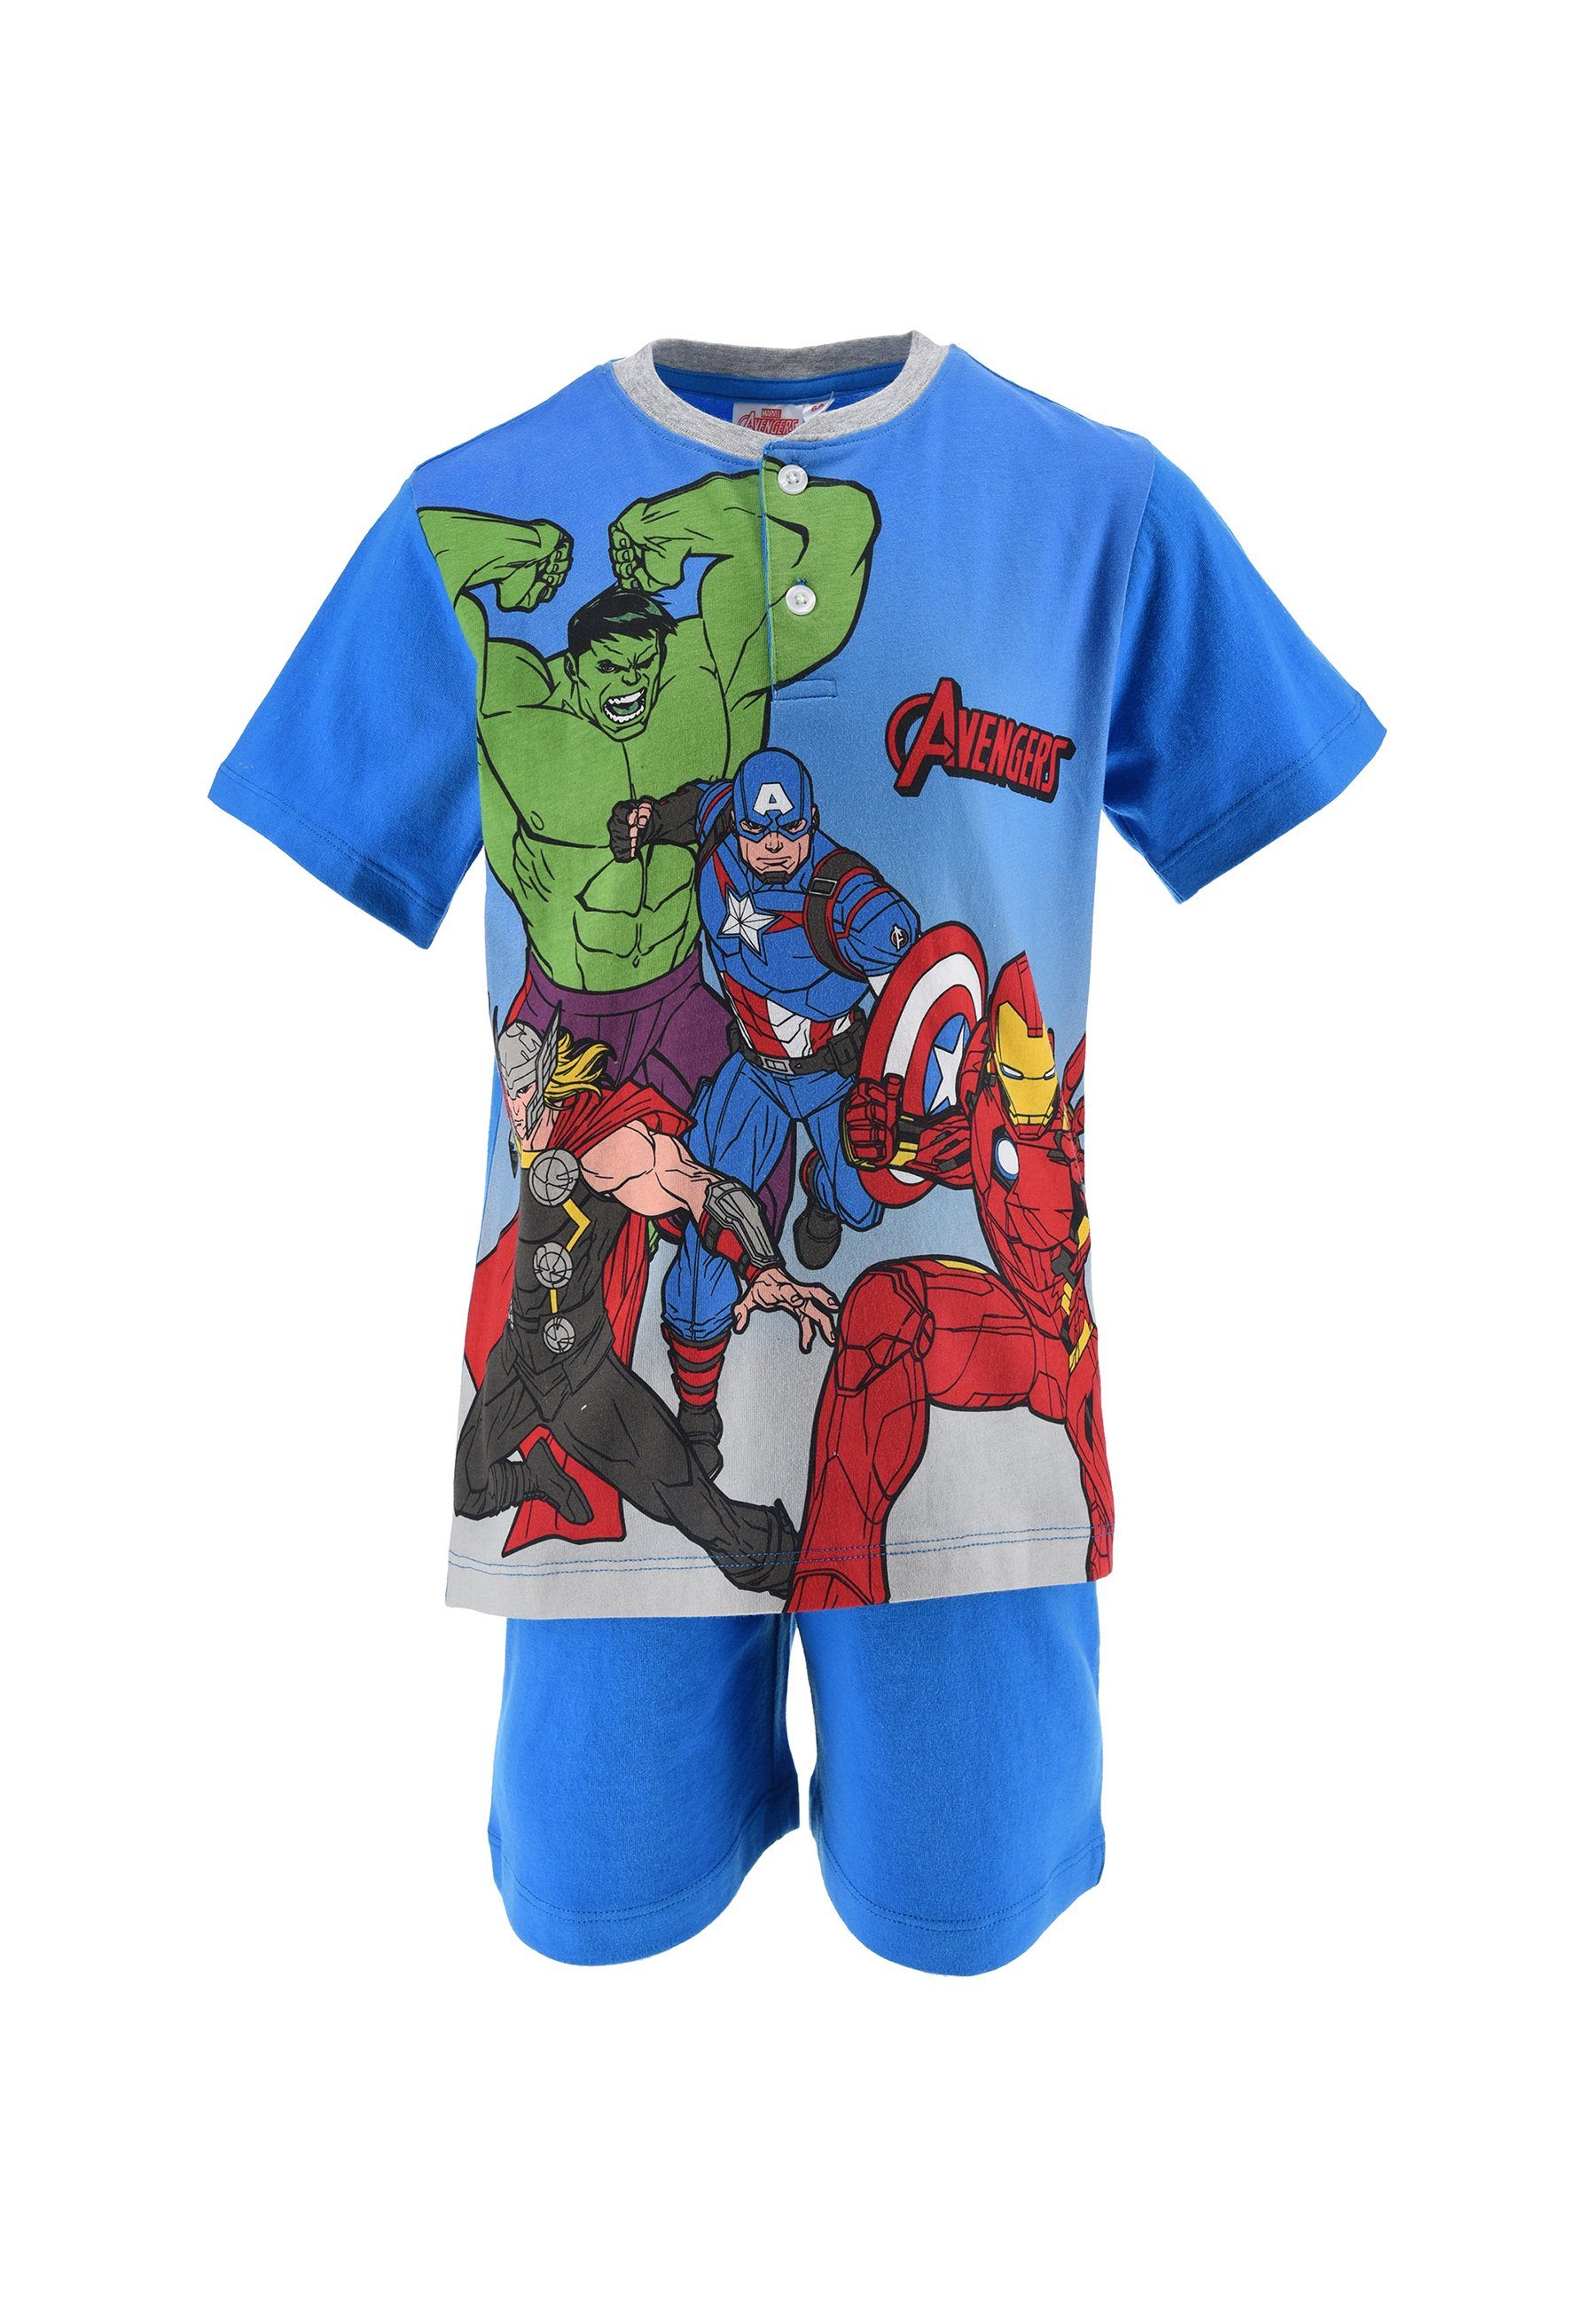 The AVENGERS Shorty Iron Kinder Blau Jungen Thor Schlaf-Set (2 tlg) Hulk Pyjama Man